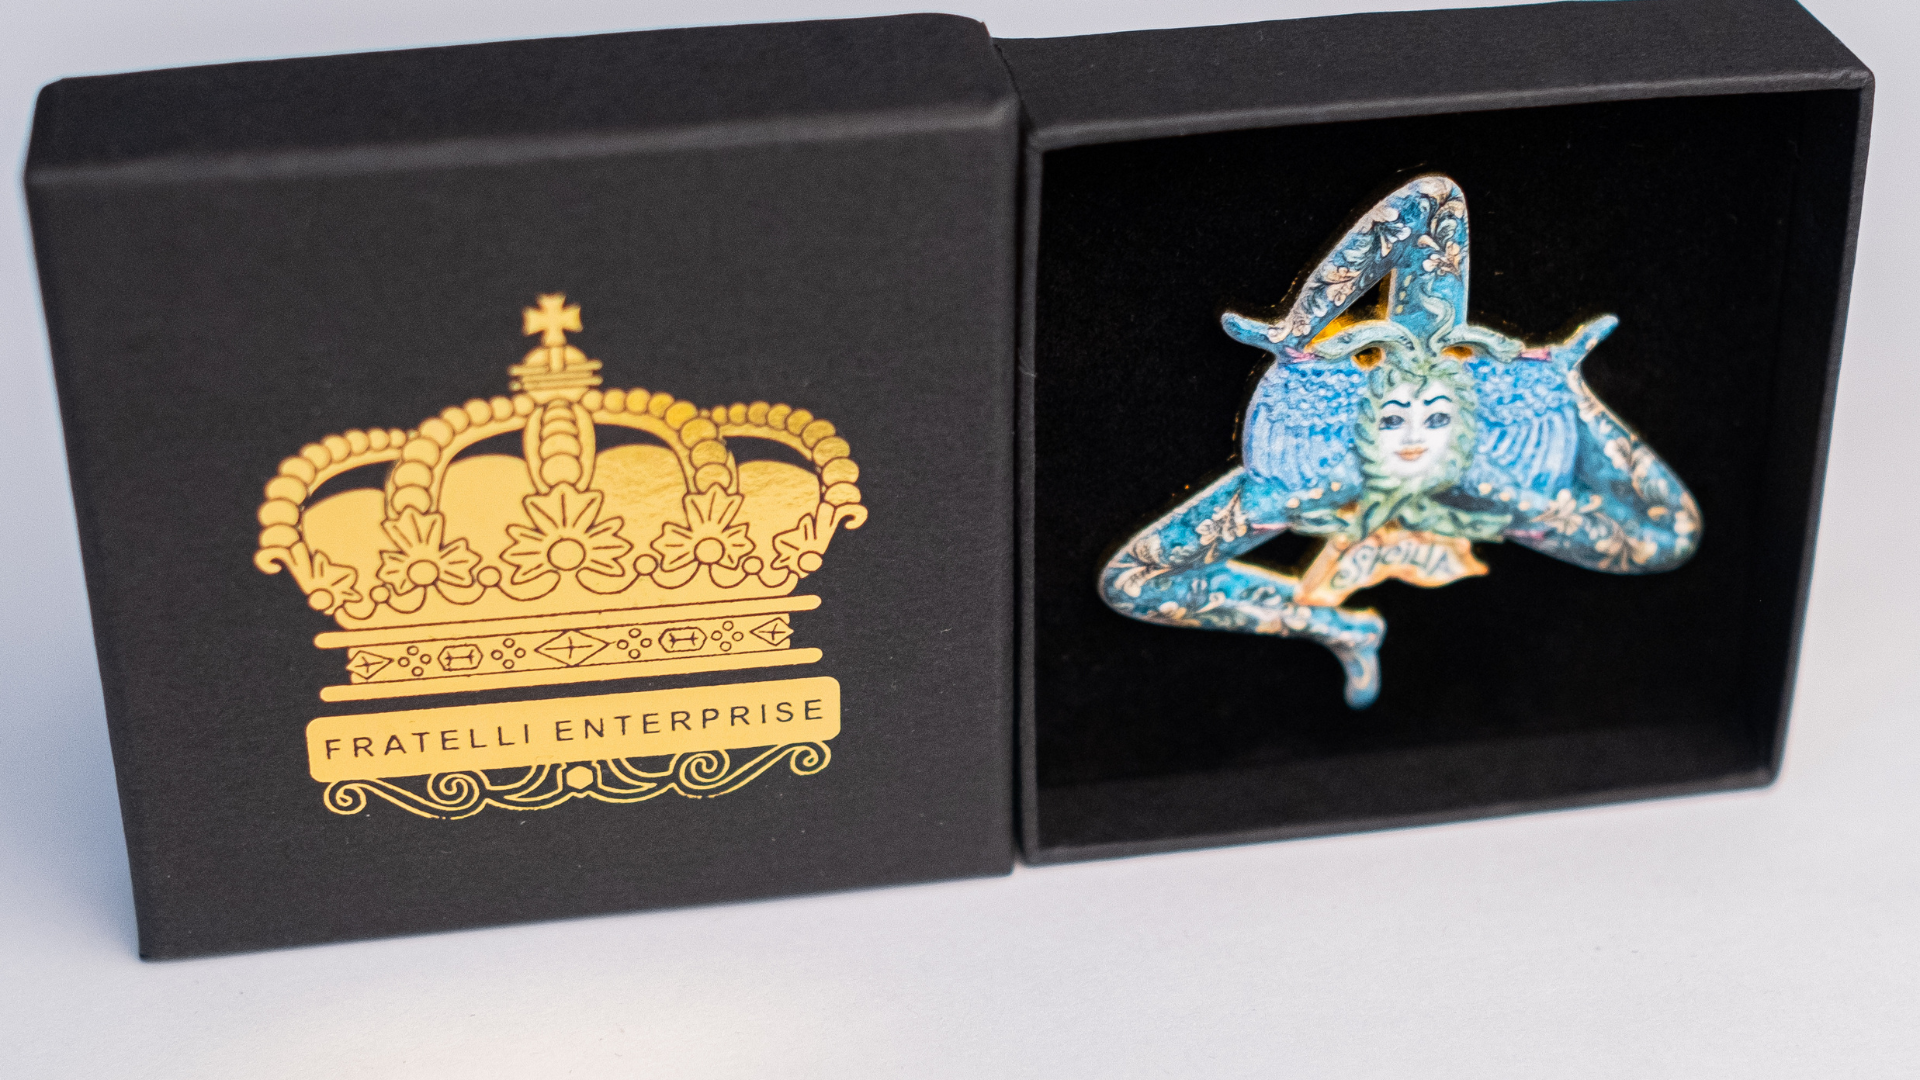 chanel jewelry gift box